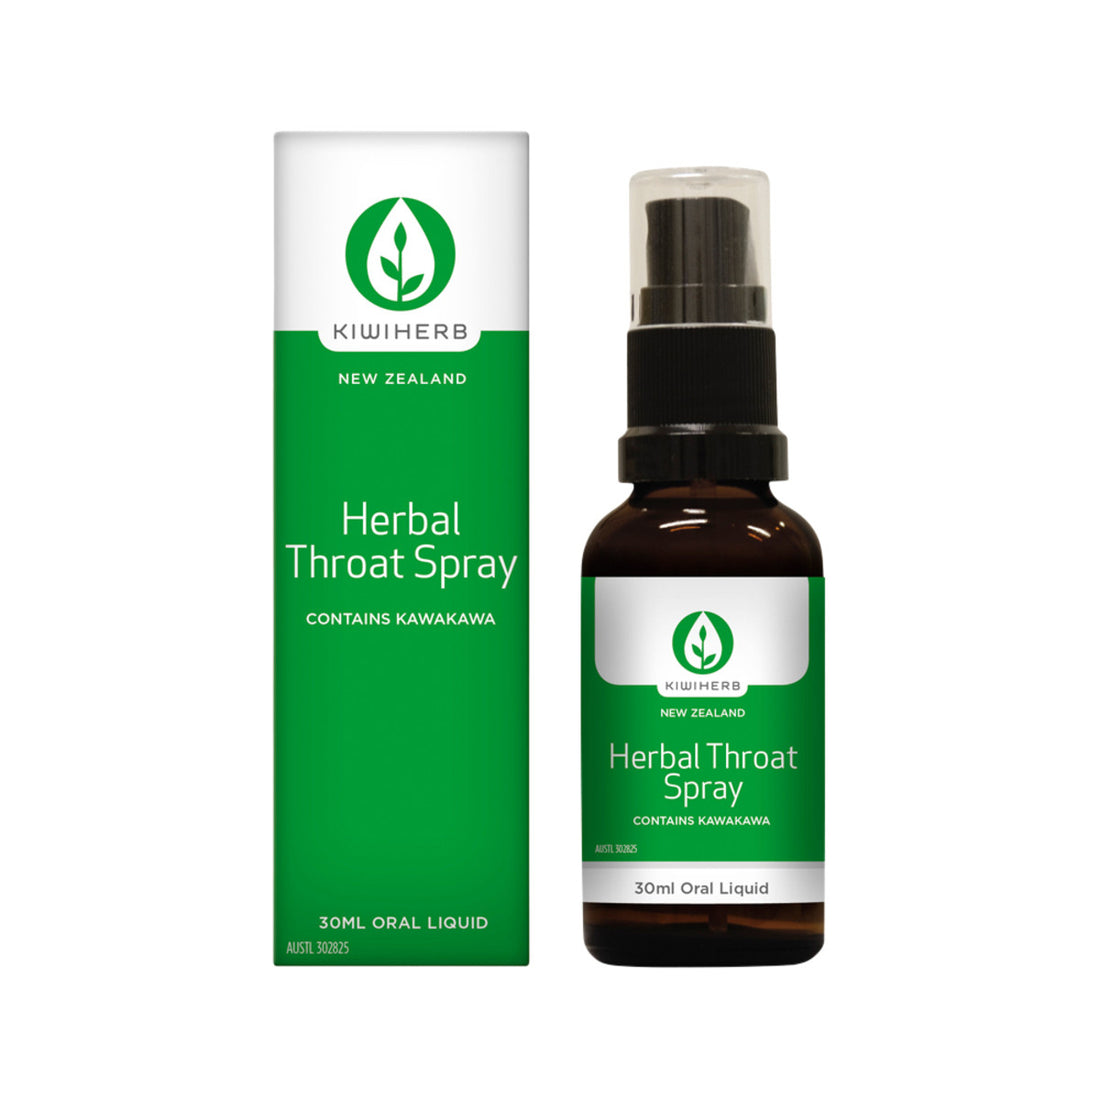 Kiwiherb Herbal Throat Spray (contains Kawakawa) 30ml